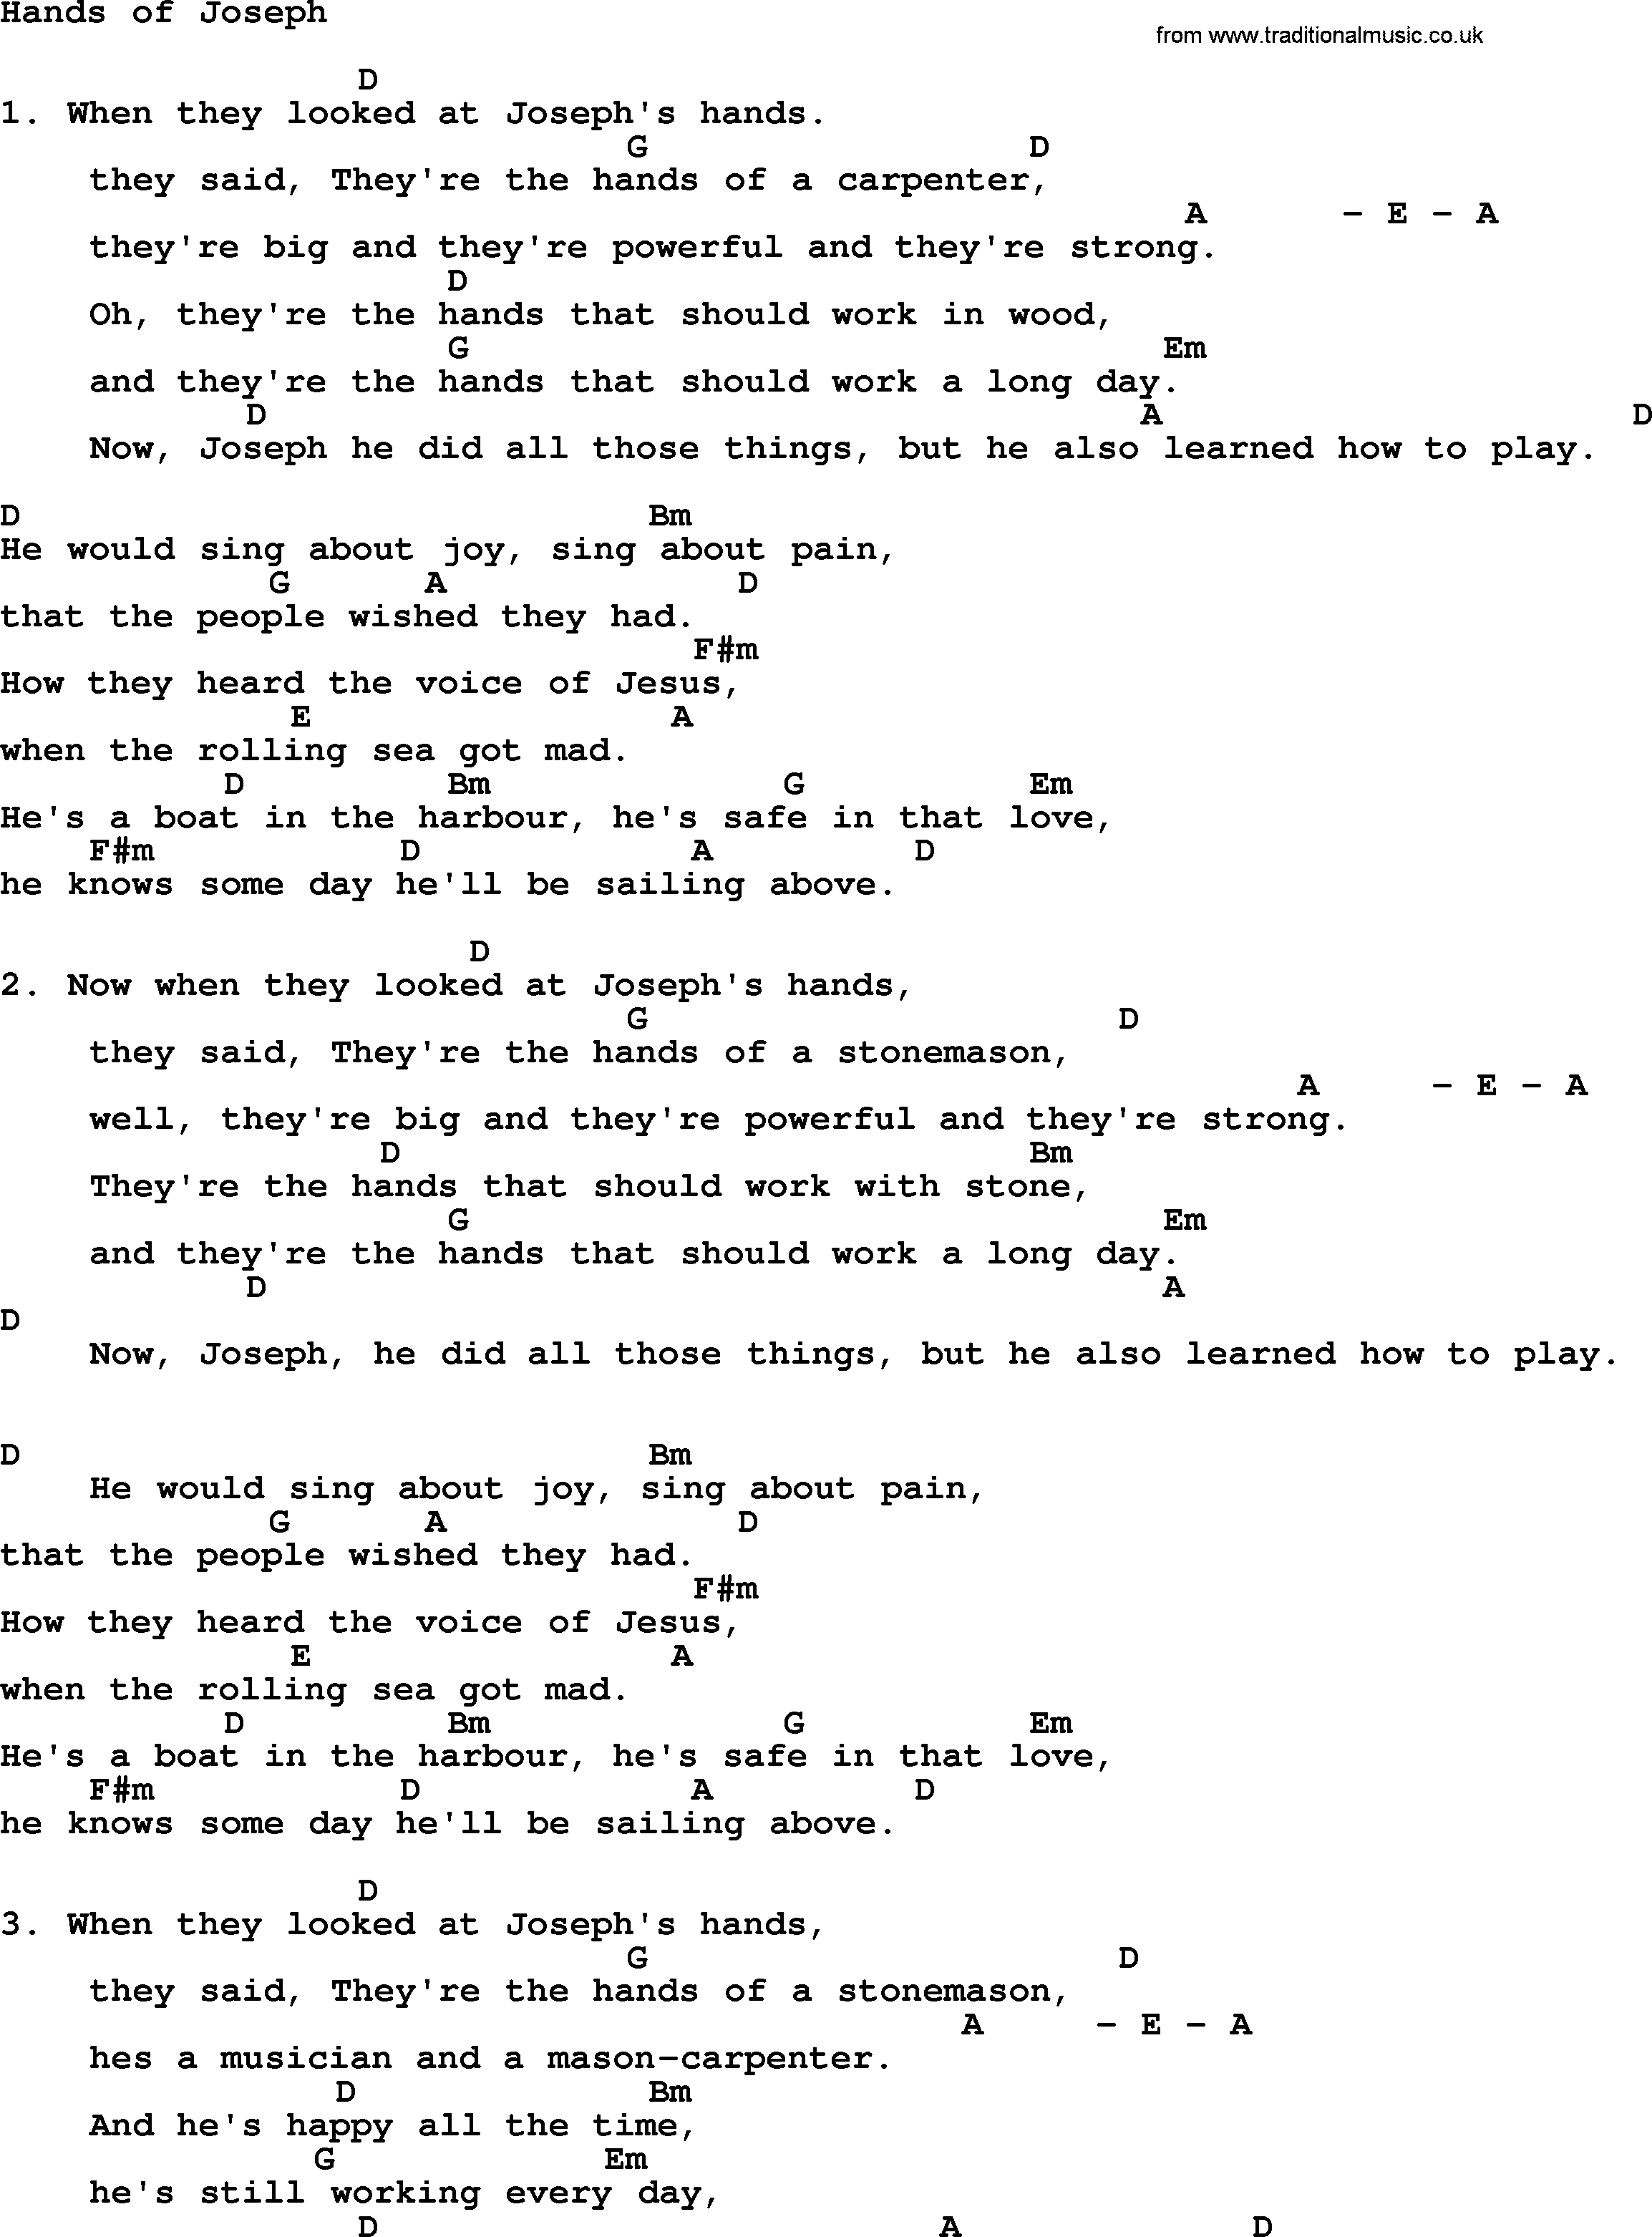 Ralph McTell Song: Hands Of Joseph, lyrics and chords